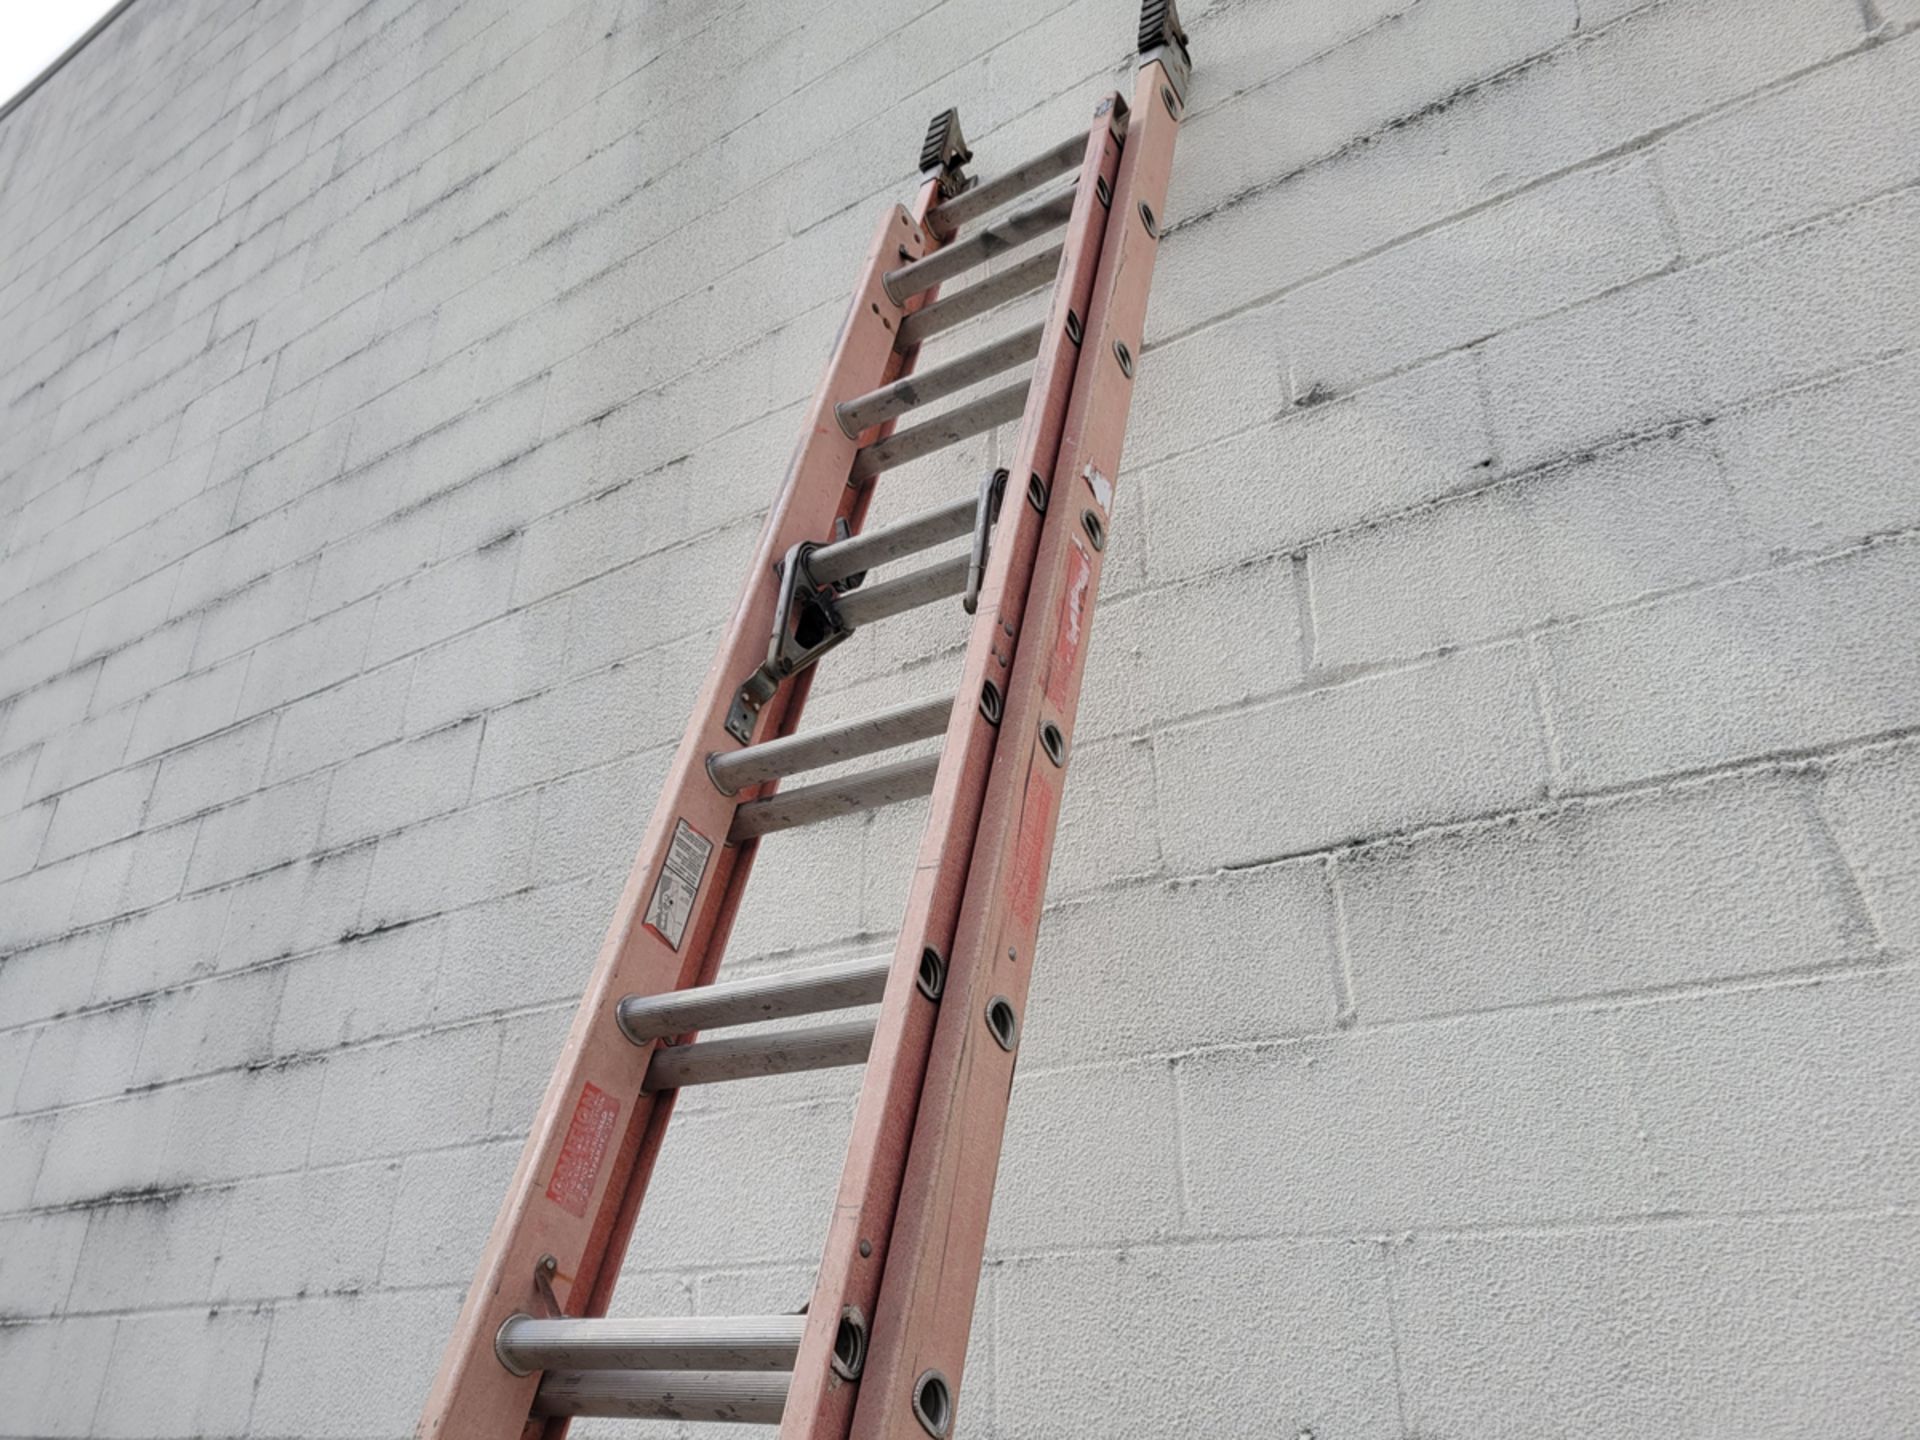 Louisville 24' Fiberglass Extension Ladder - Image 3 of 3